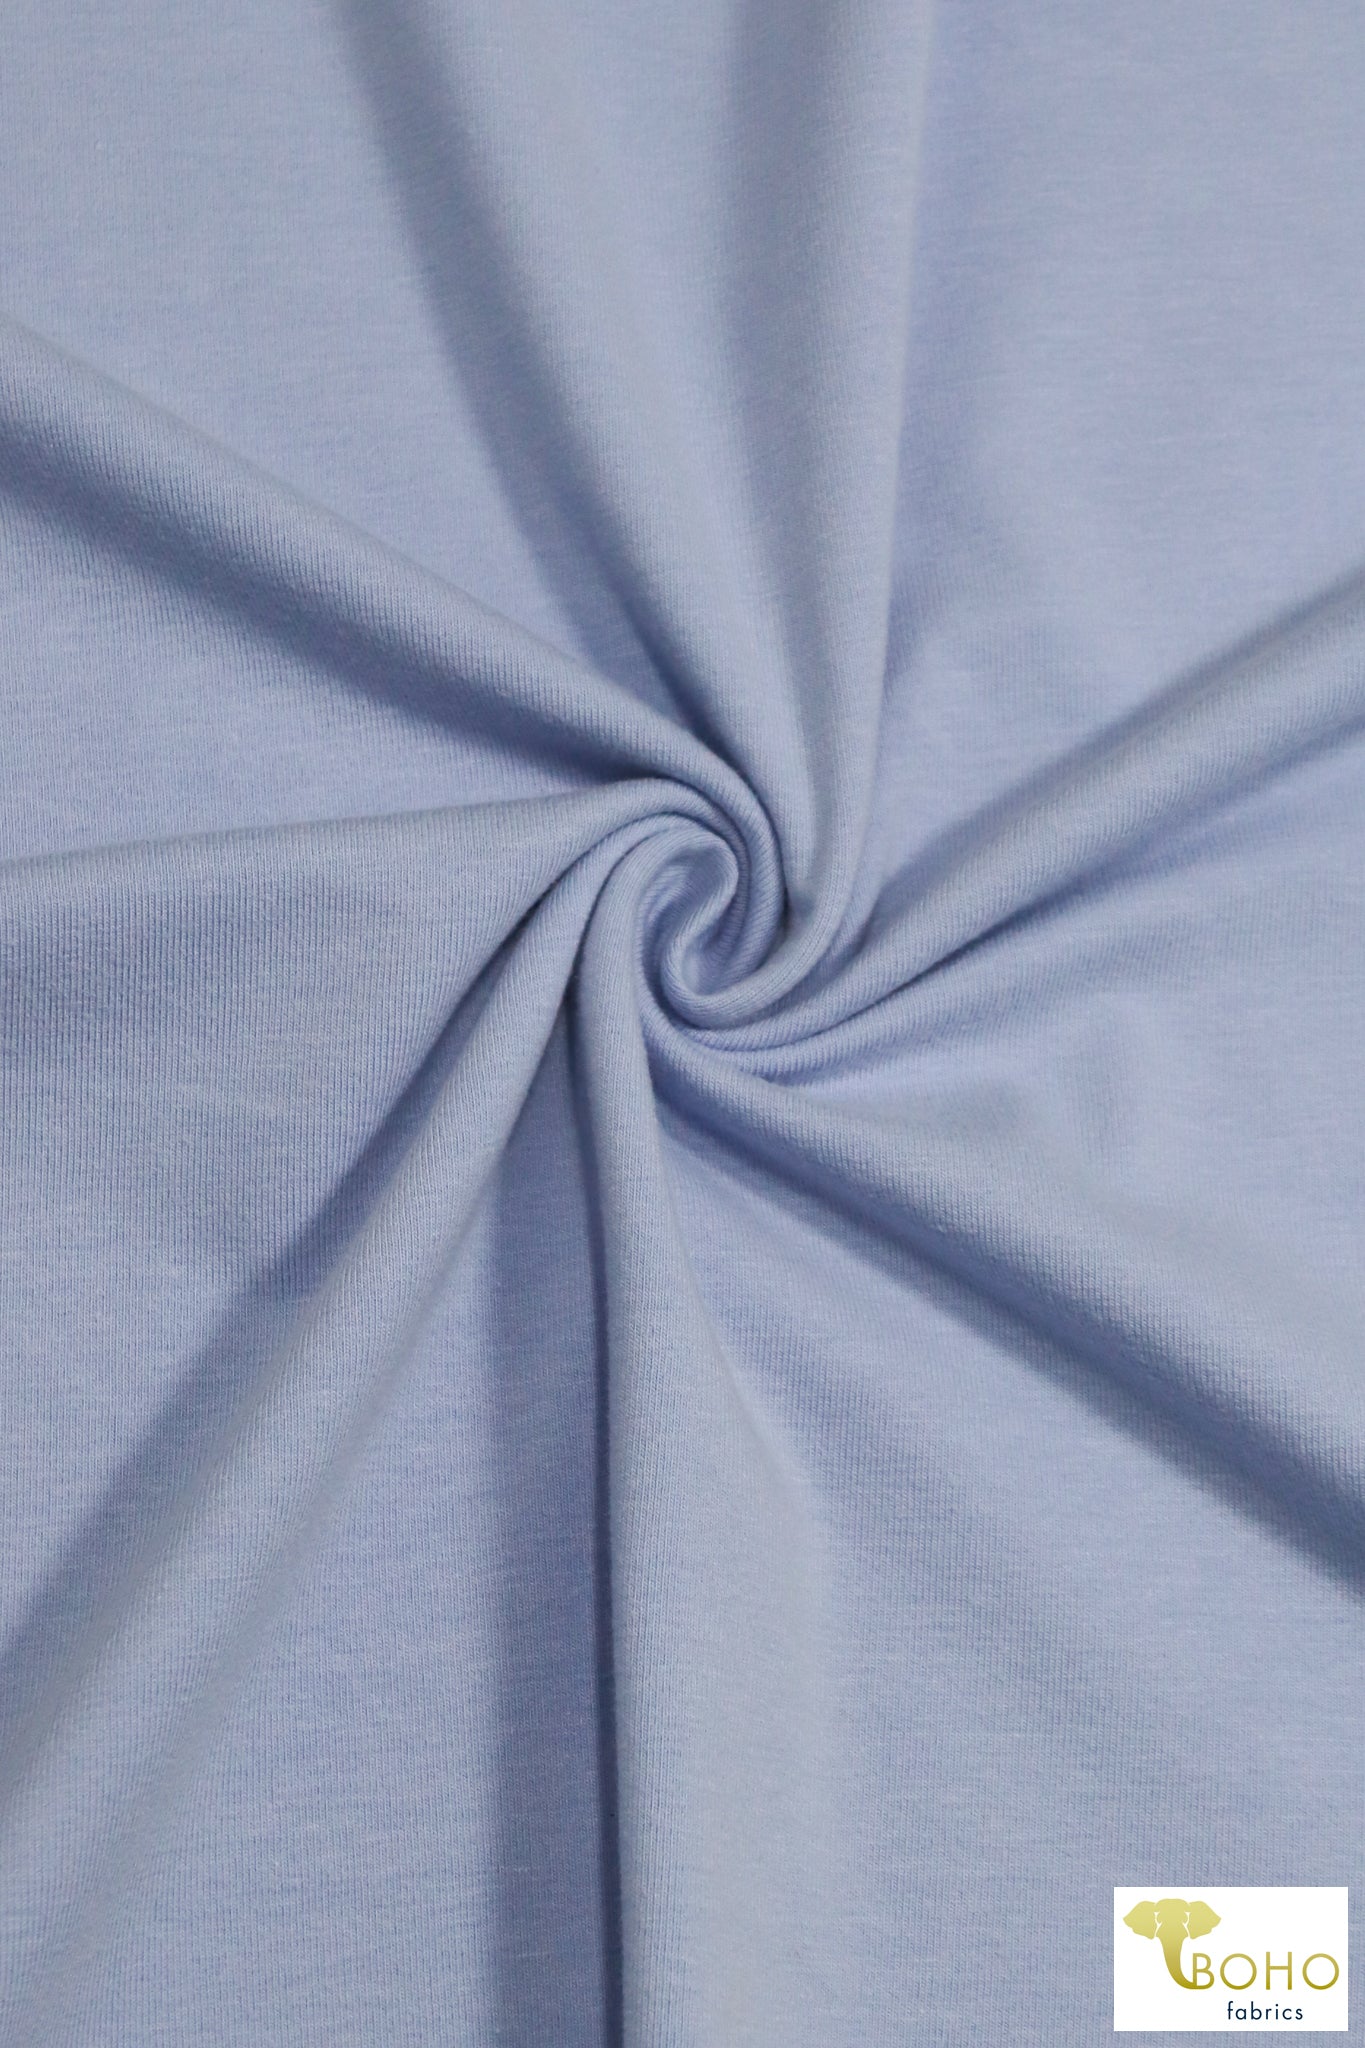 Periwinkle, Cotton Spandex Knit, 10 oz. - Boho Fabrics